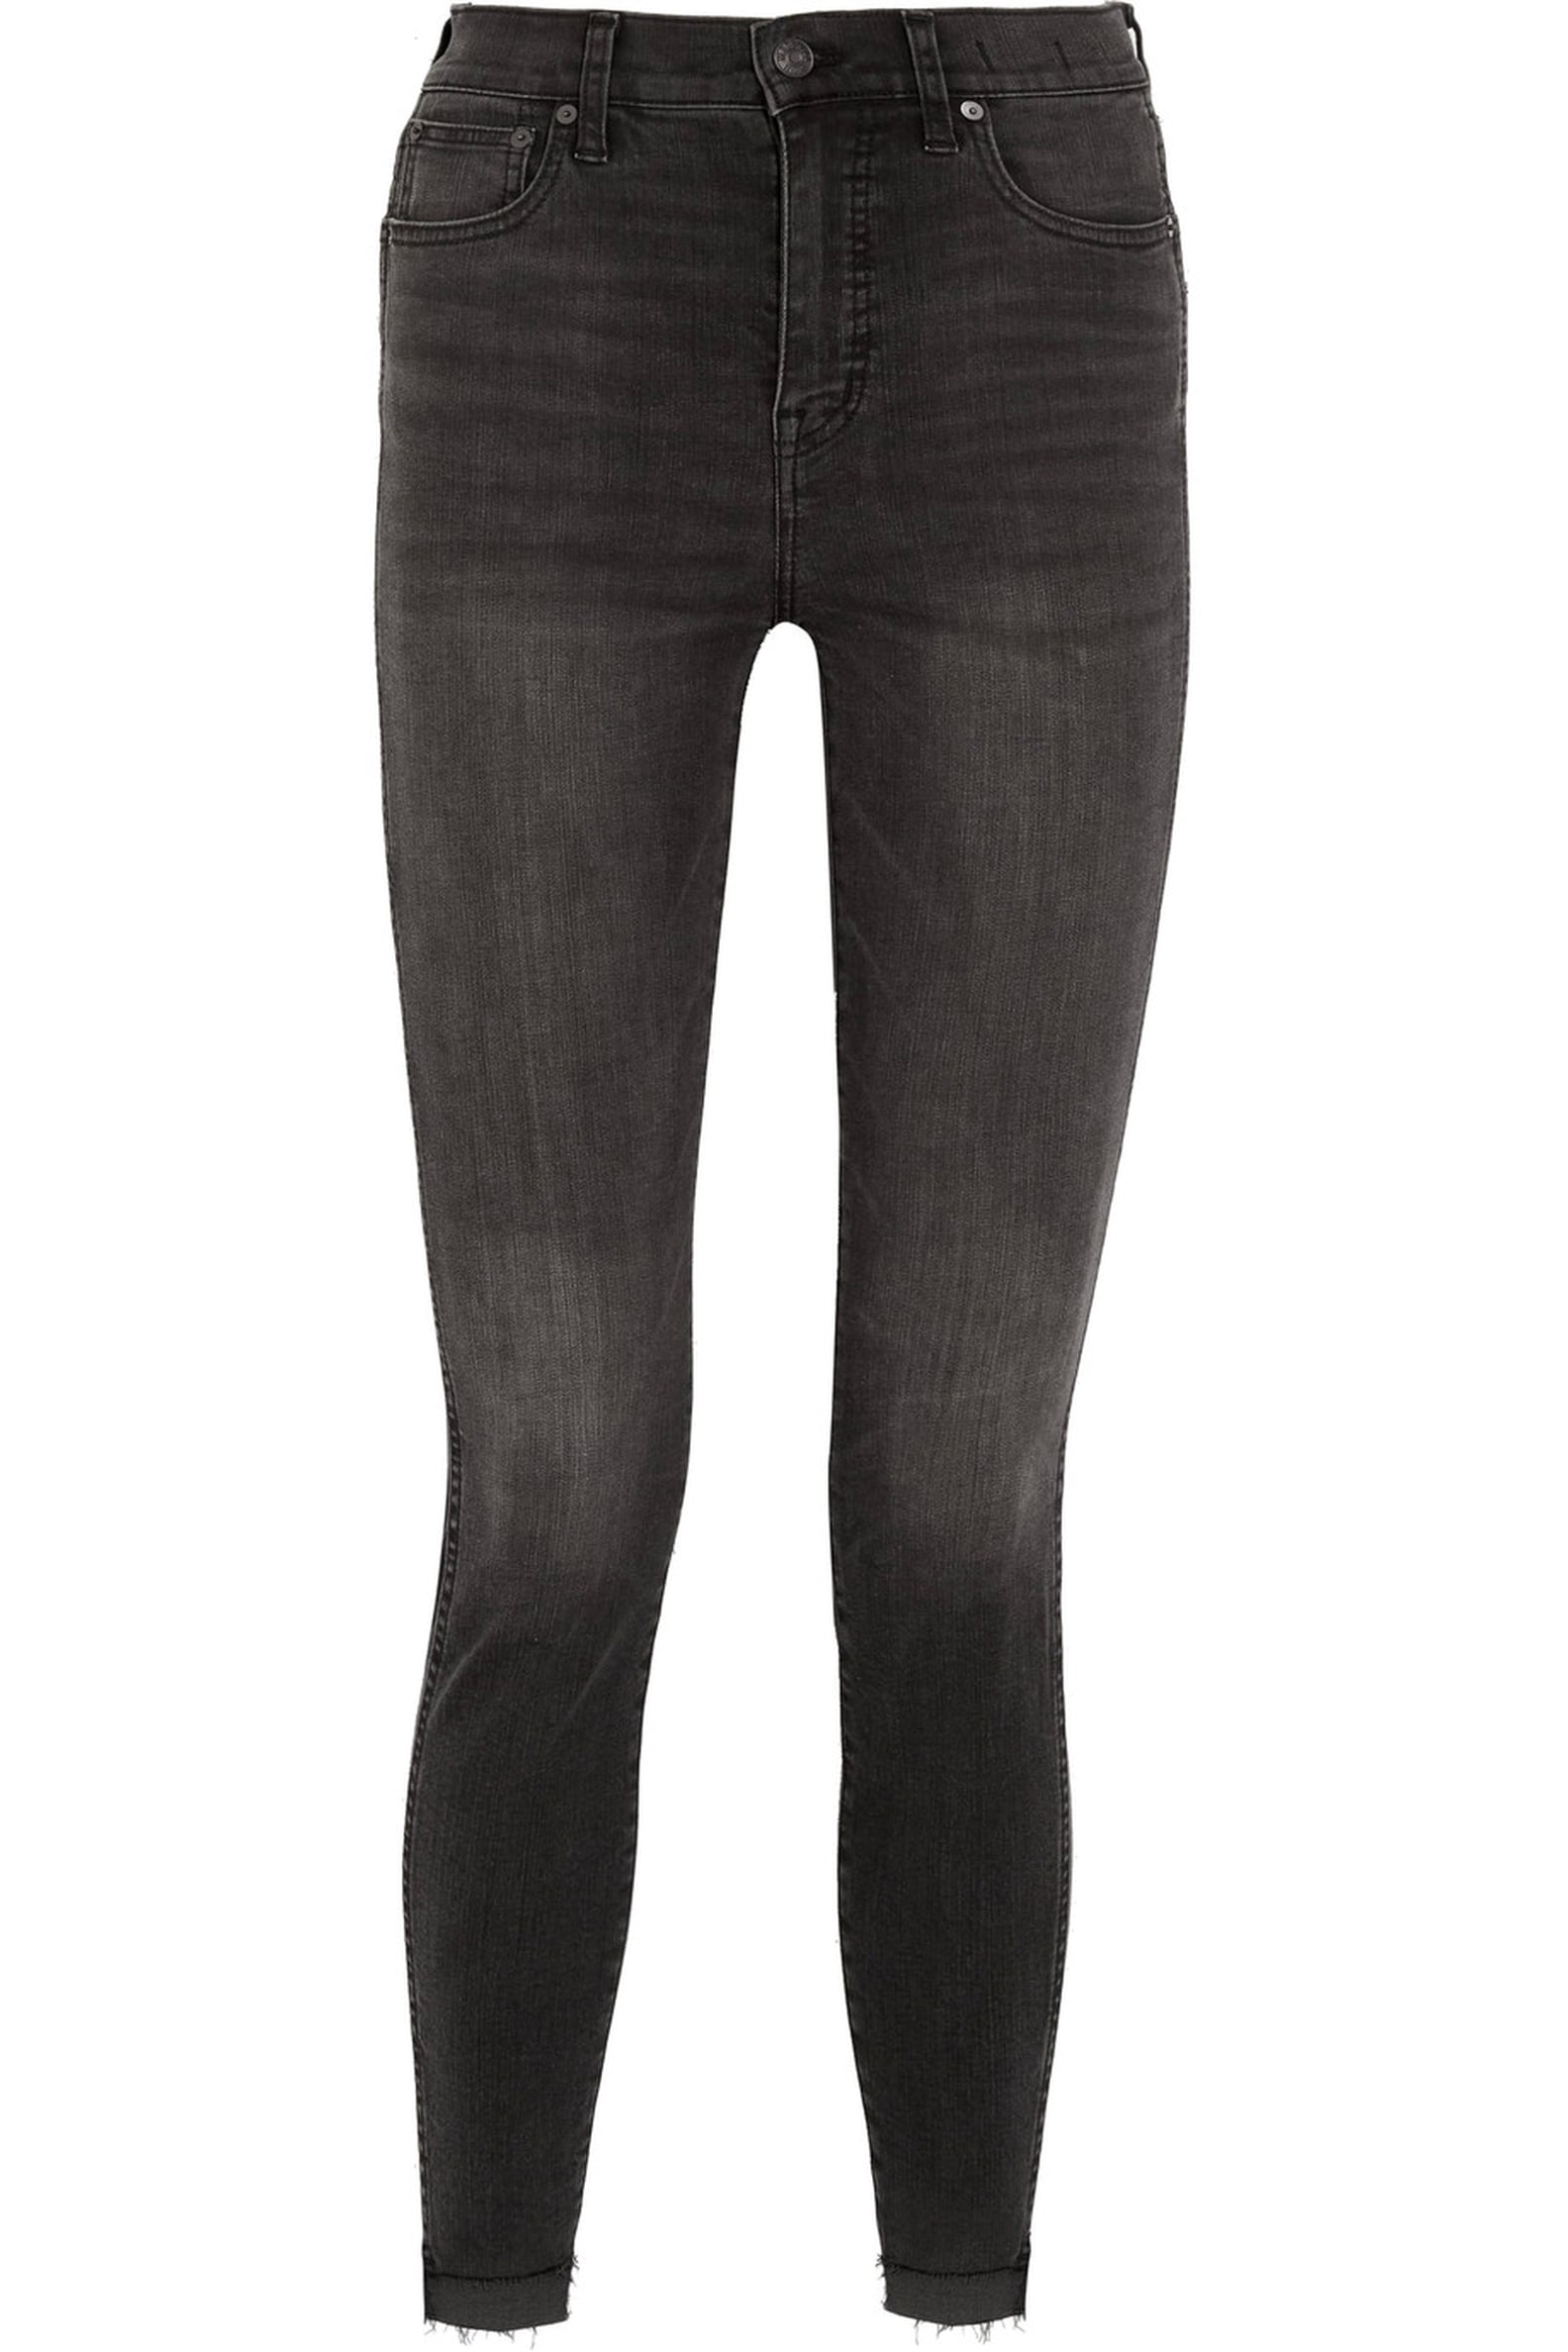 Meghan Markle Wearing Black Jeans | POPSUGAR Fashion